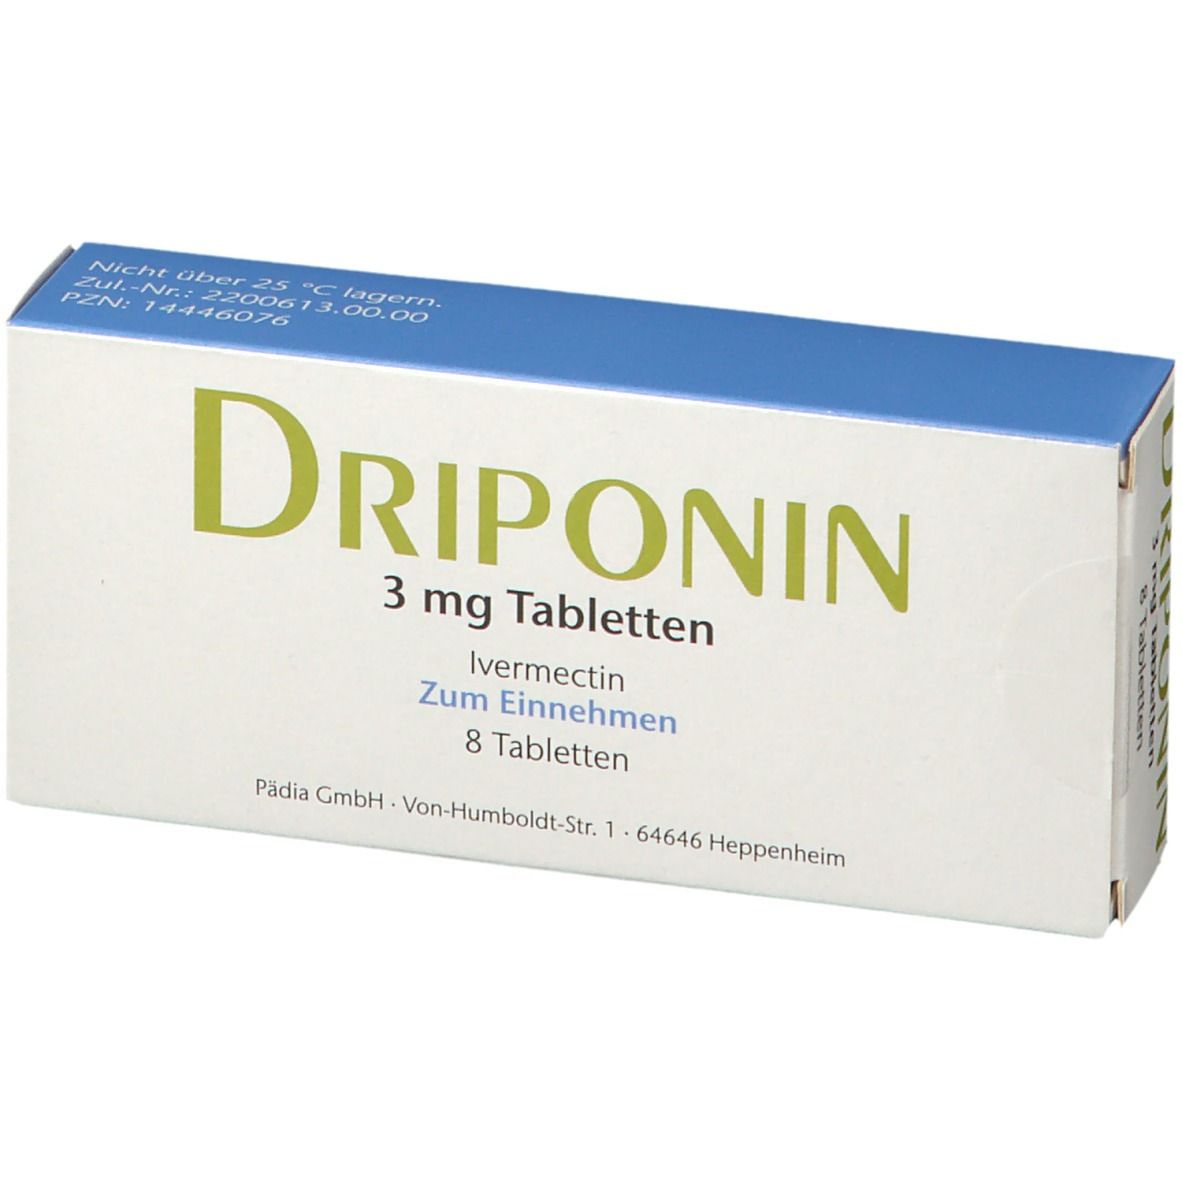 Driponin 3 mg 8 St mit dem E-Rezept kaufen - SHOP APOTHEKE